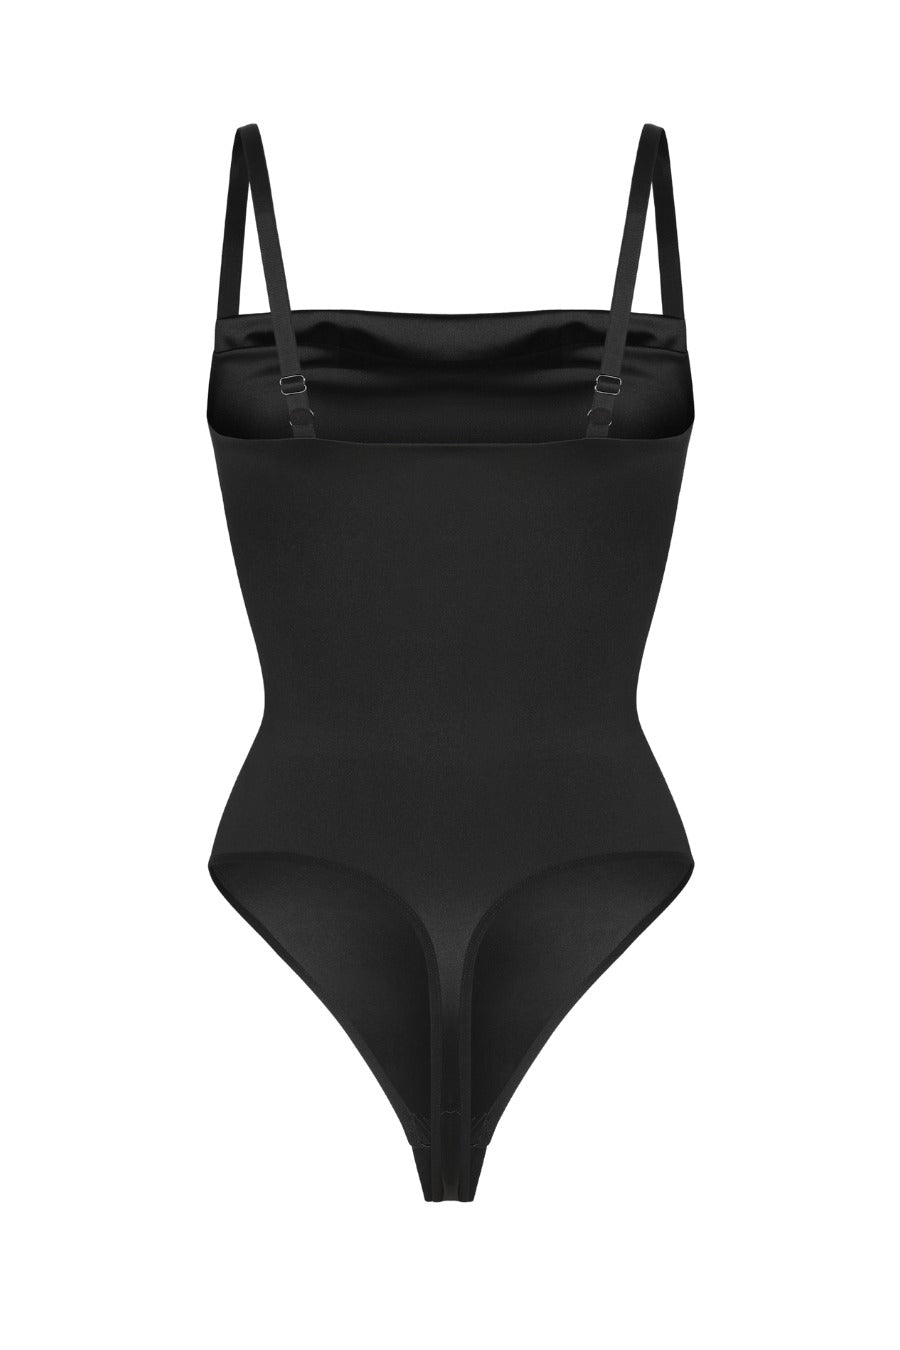 Ava Satin Shaping Bodysuit - Black Contour Clothing